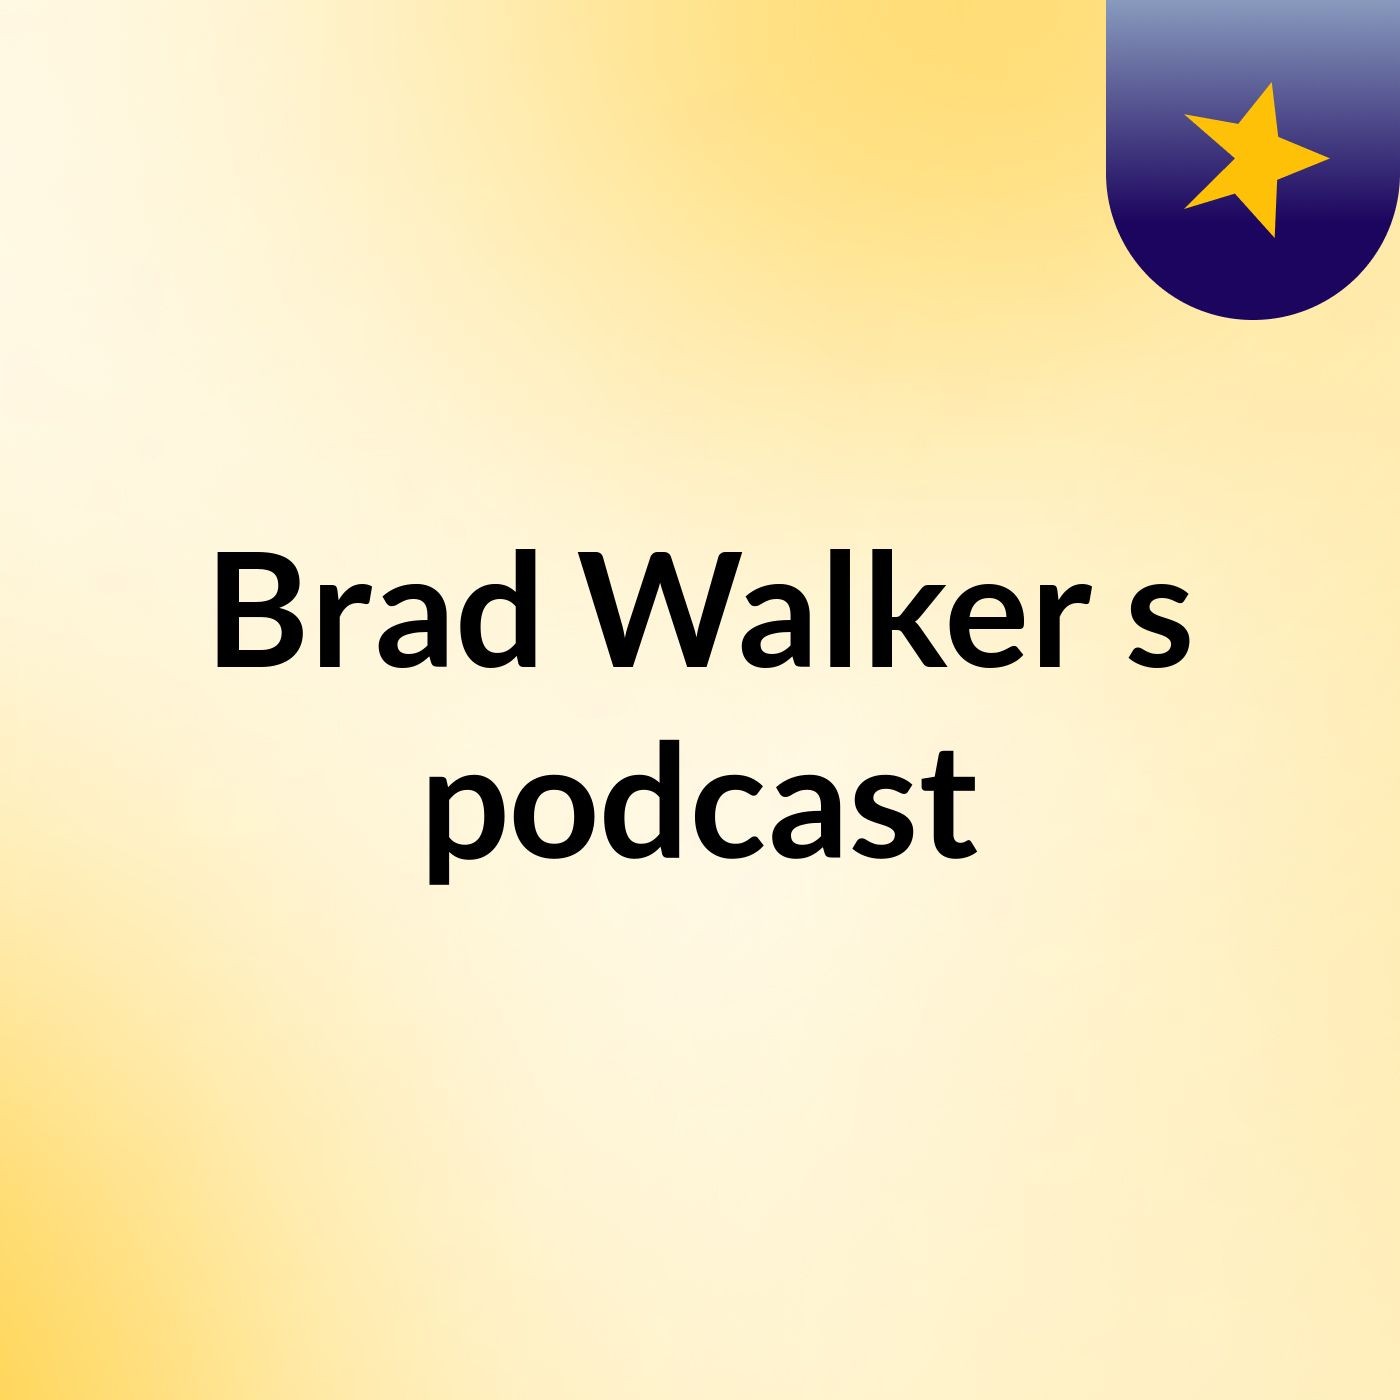 Brad Walker's podcast